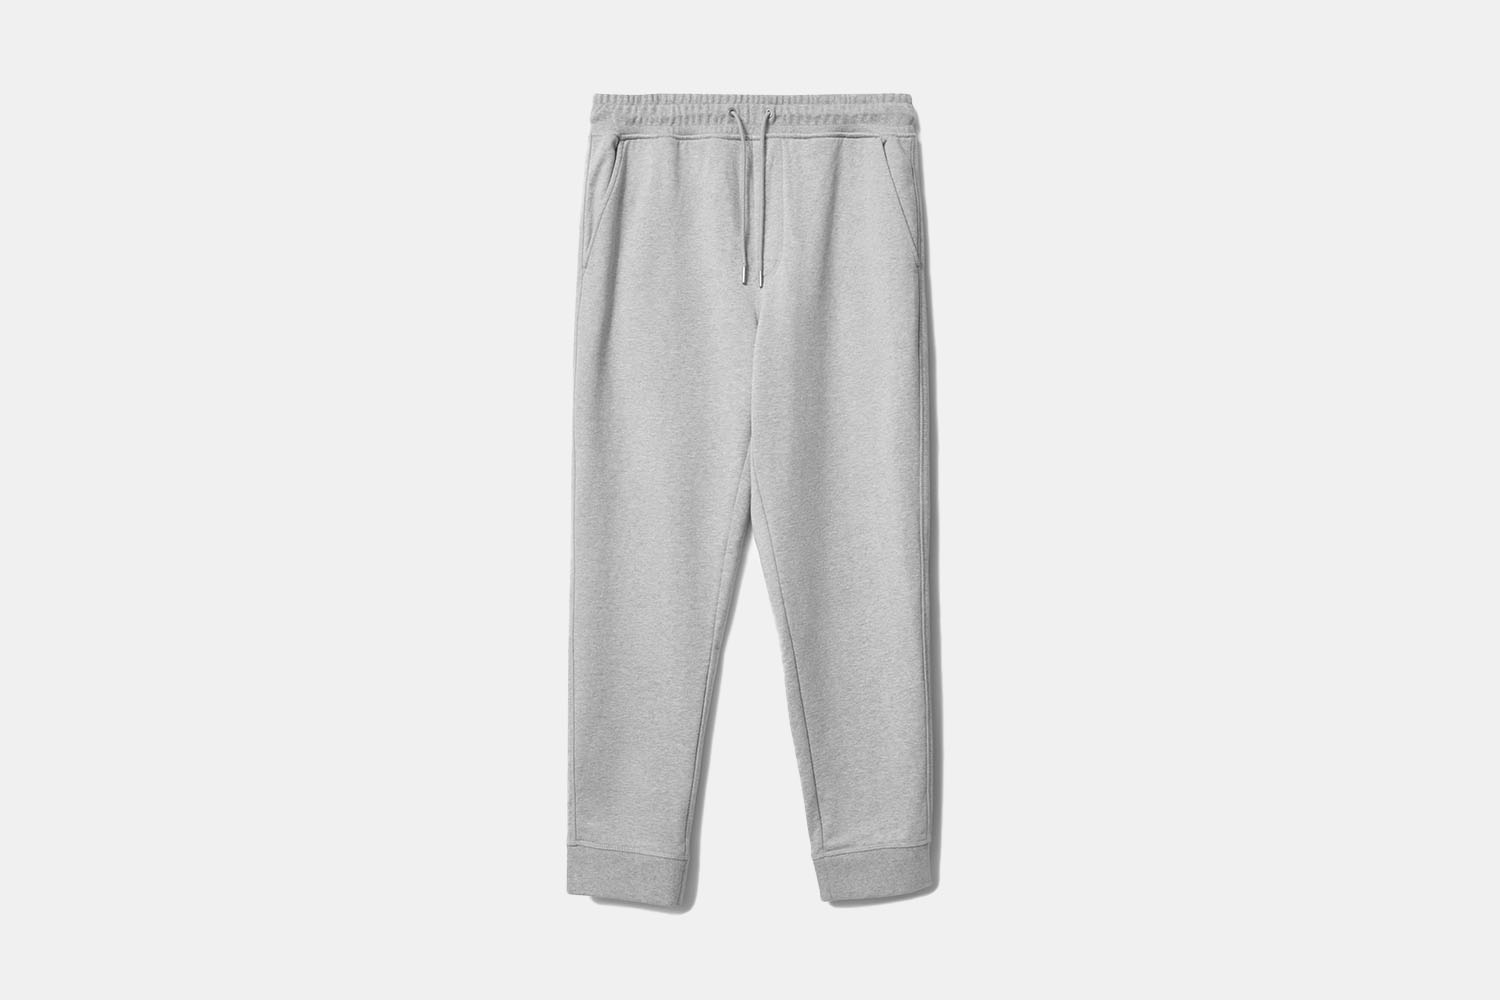 a pair of basic grey sweats 